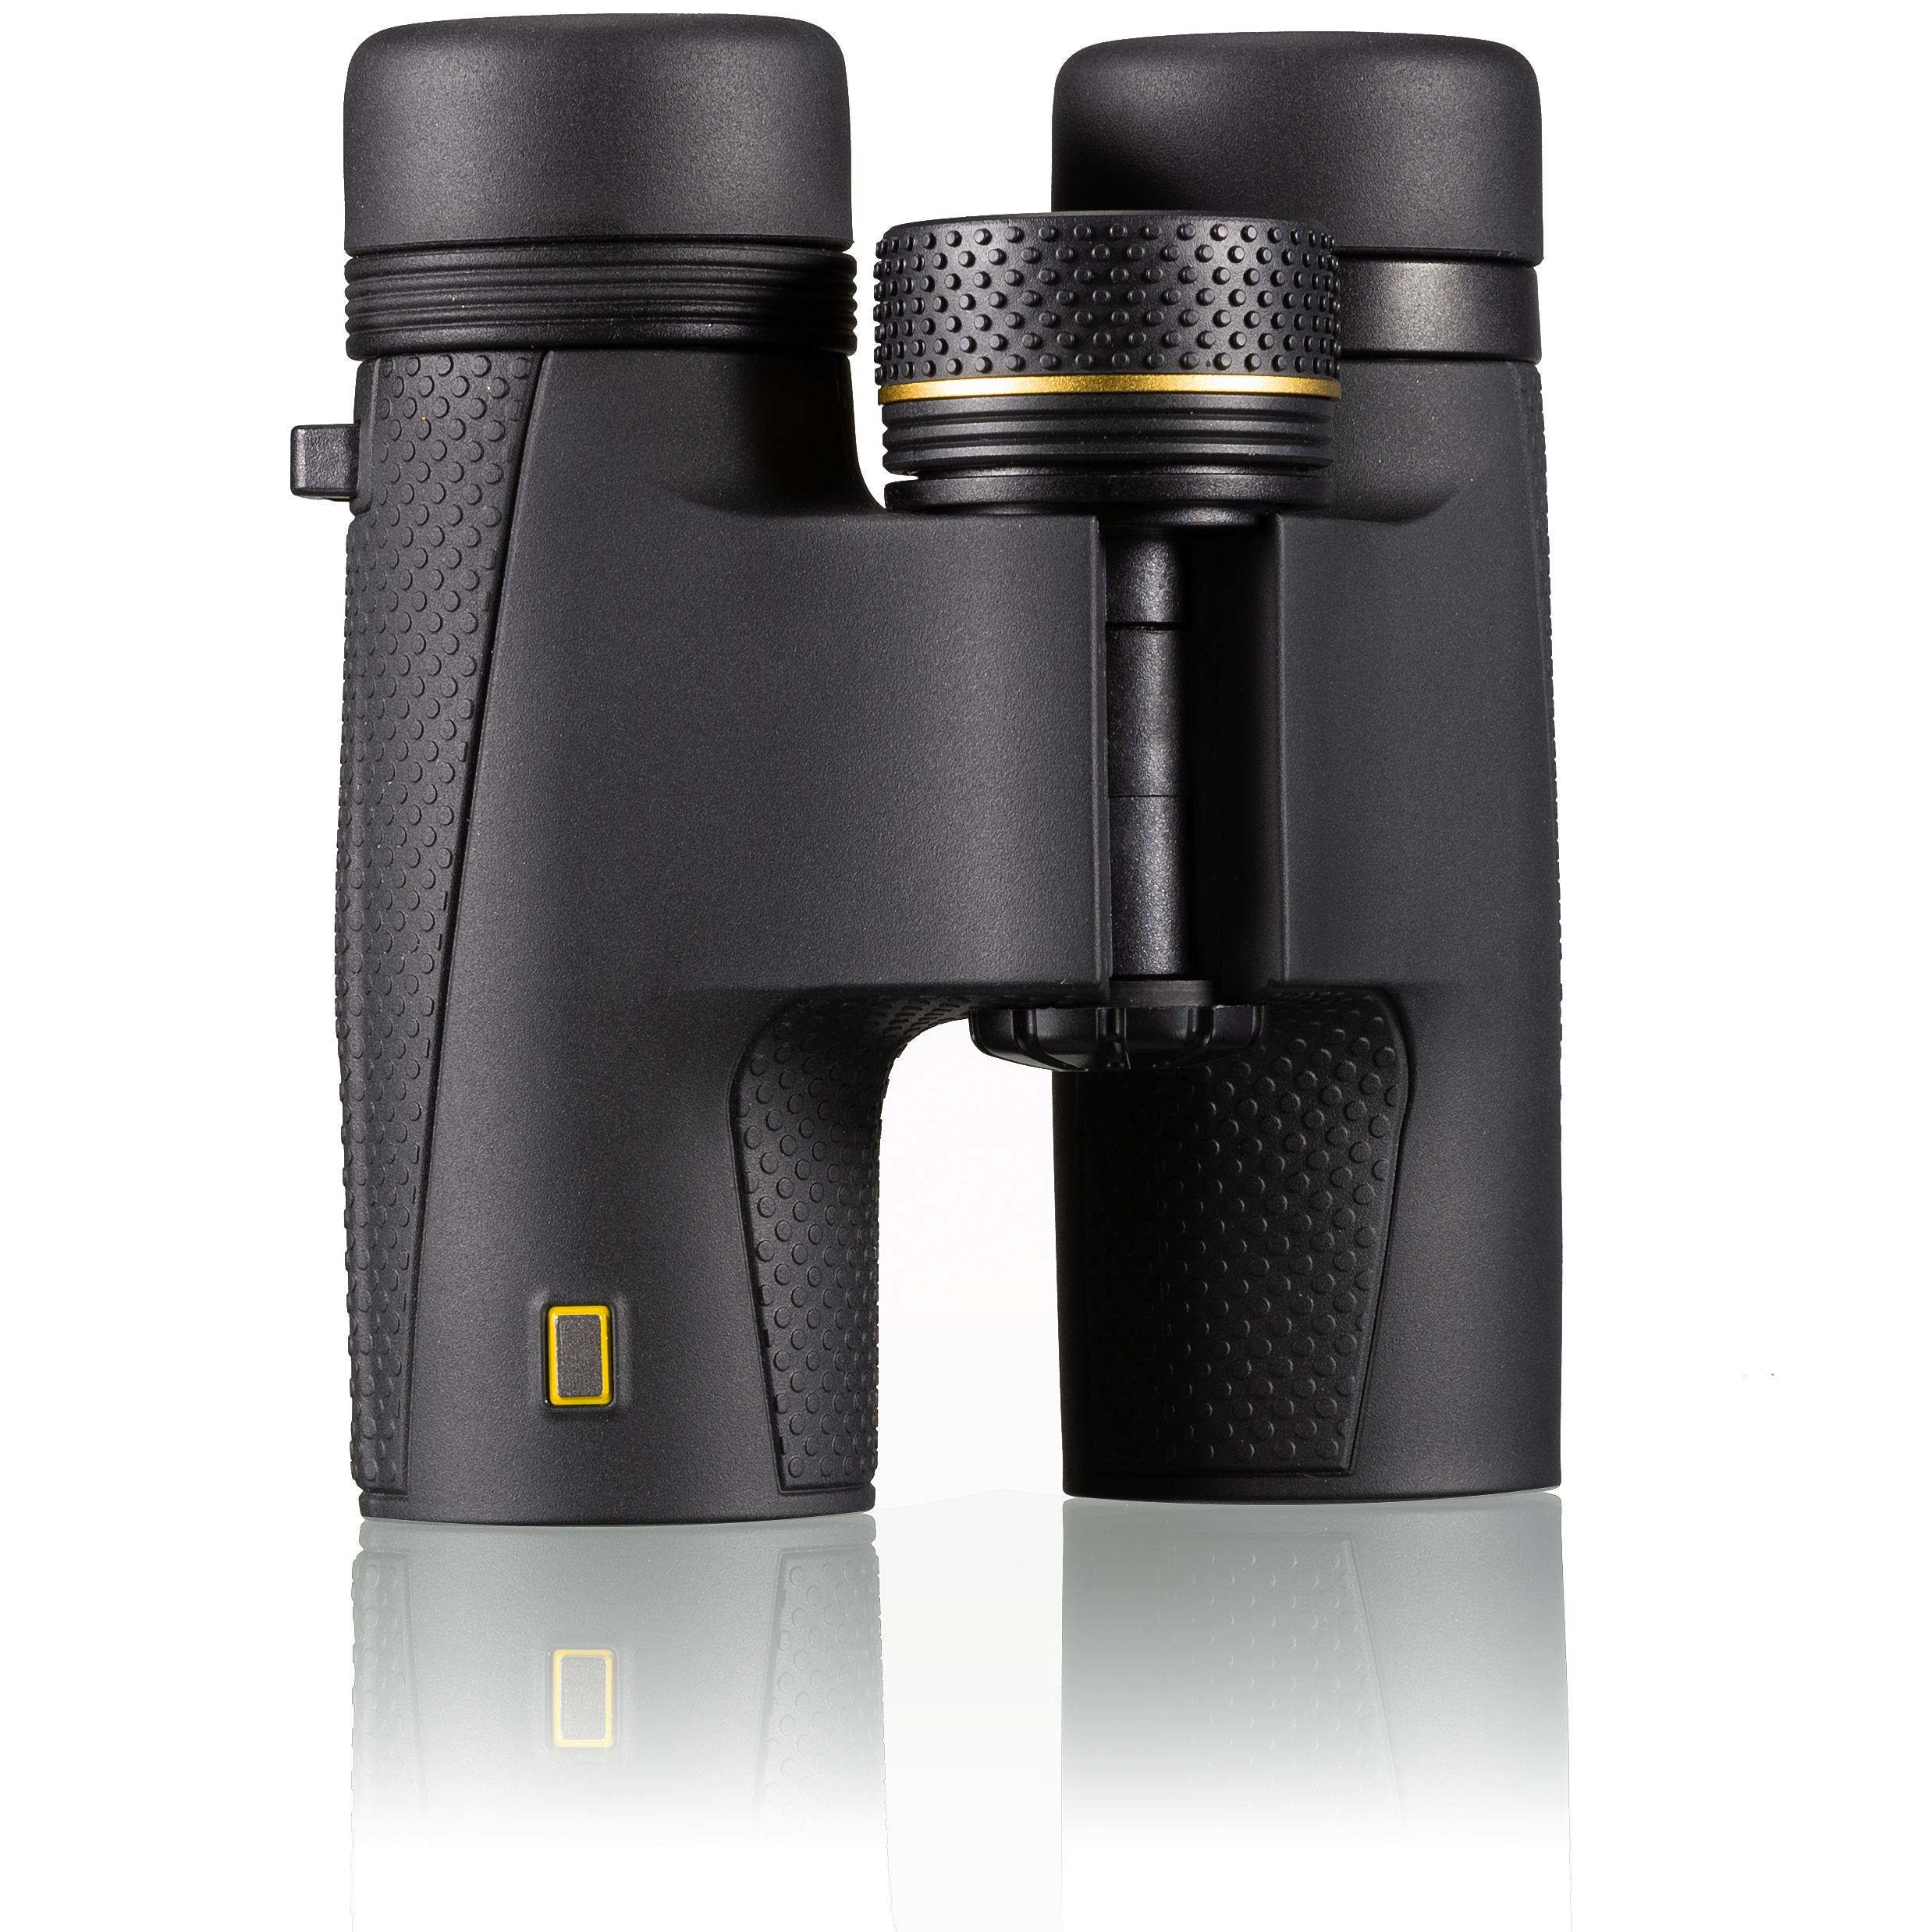 NATIONAL GEOGRAPHIC 10x25 compact binoculars waterproof